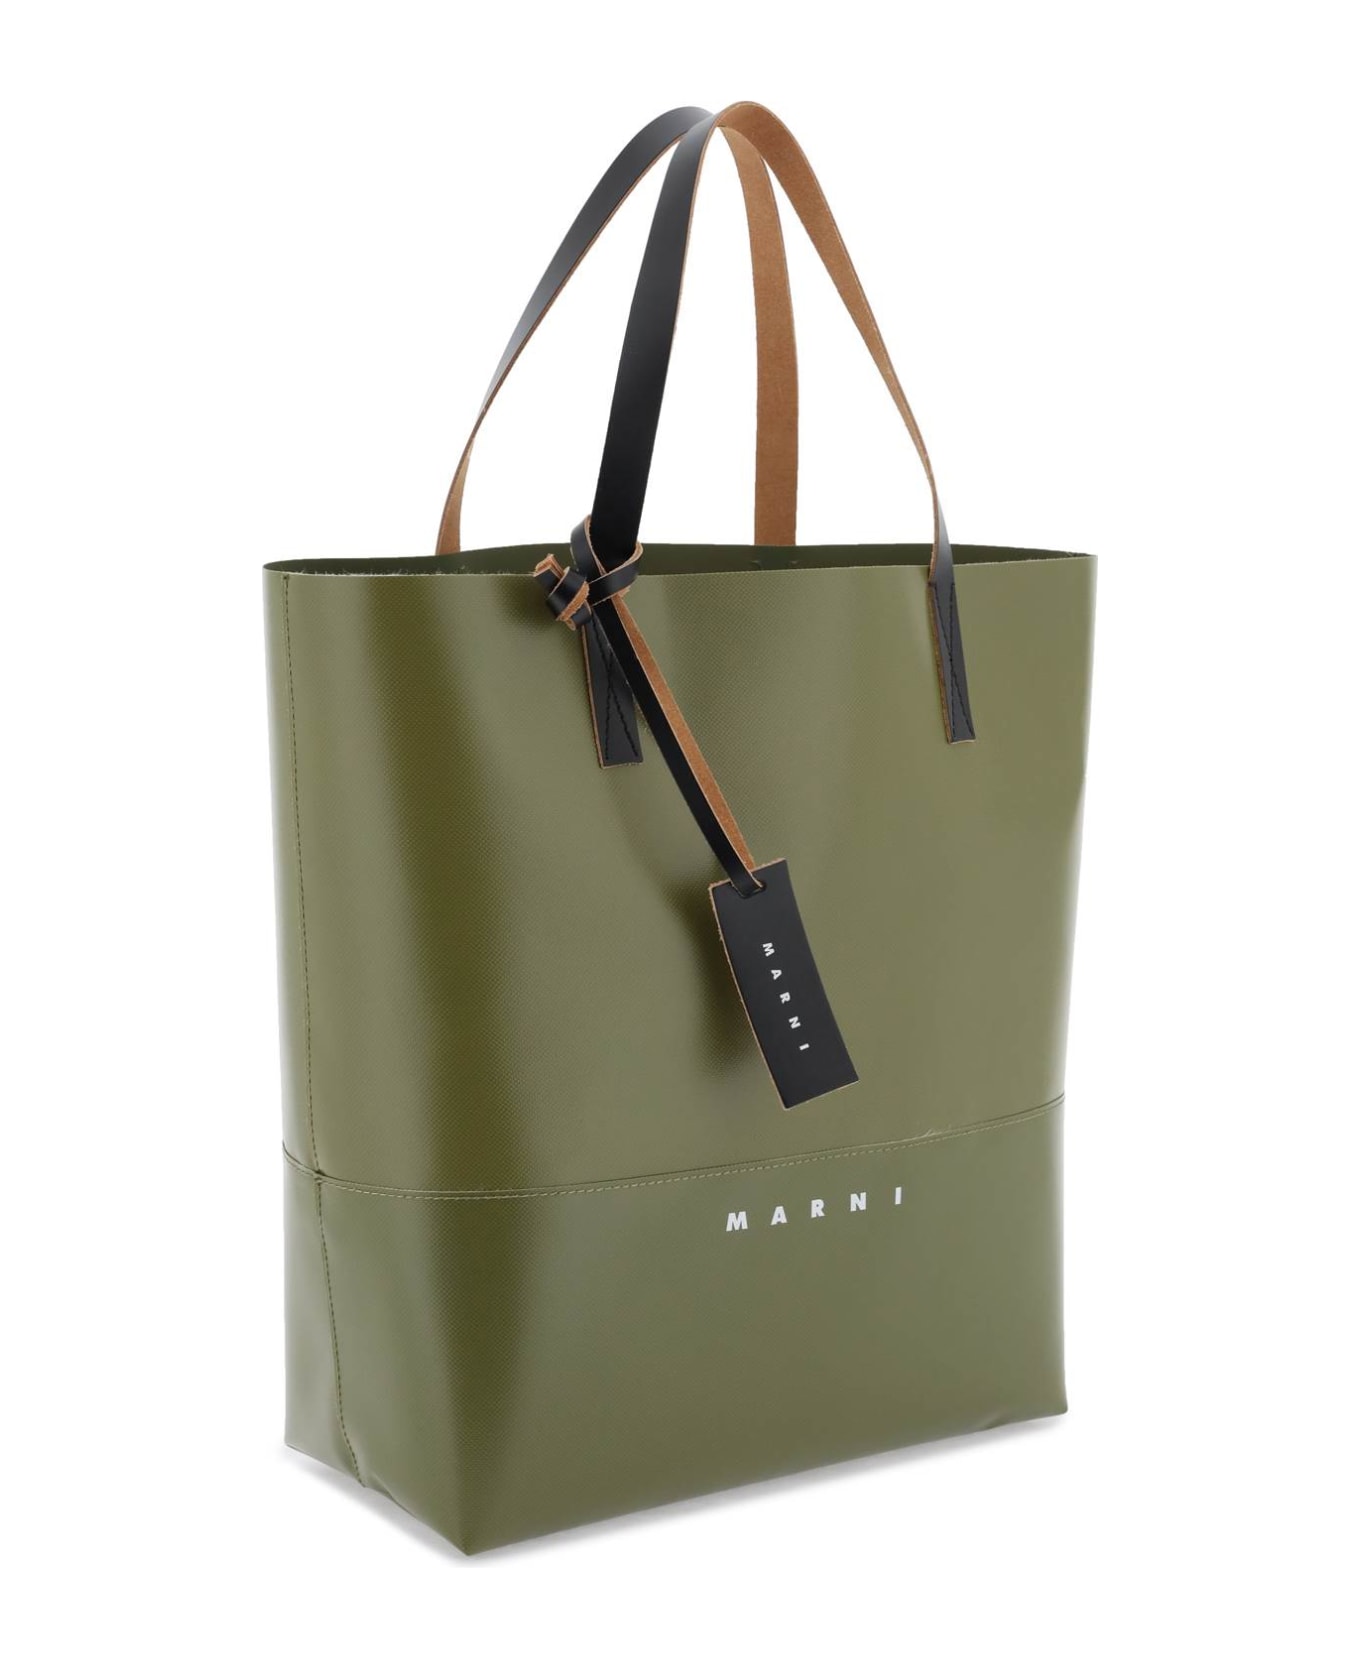 Marni Shopping Bag With Logo - LEAV GREEN (Green)